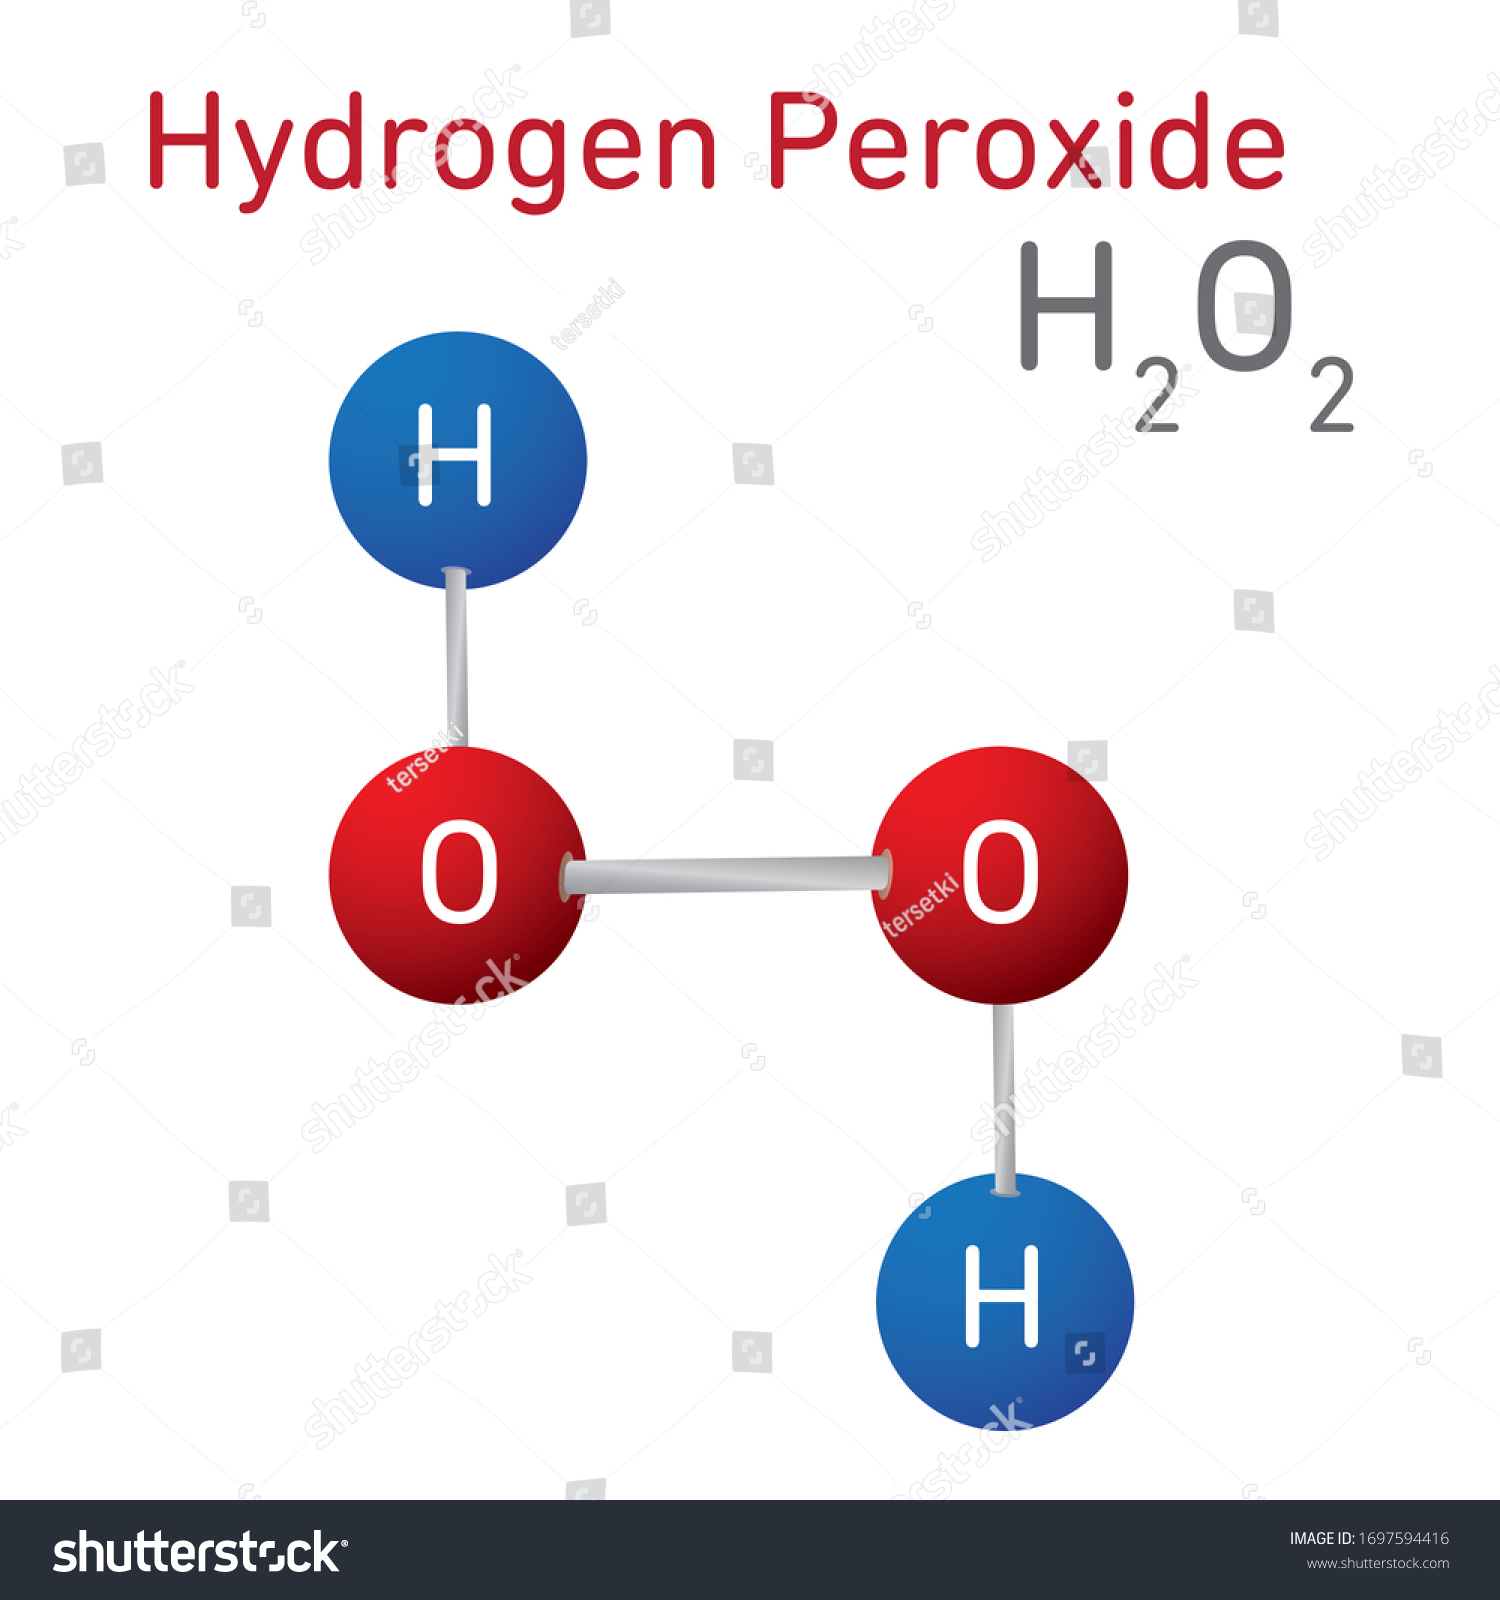 Hydrogen peroxide formula